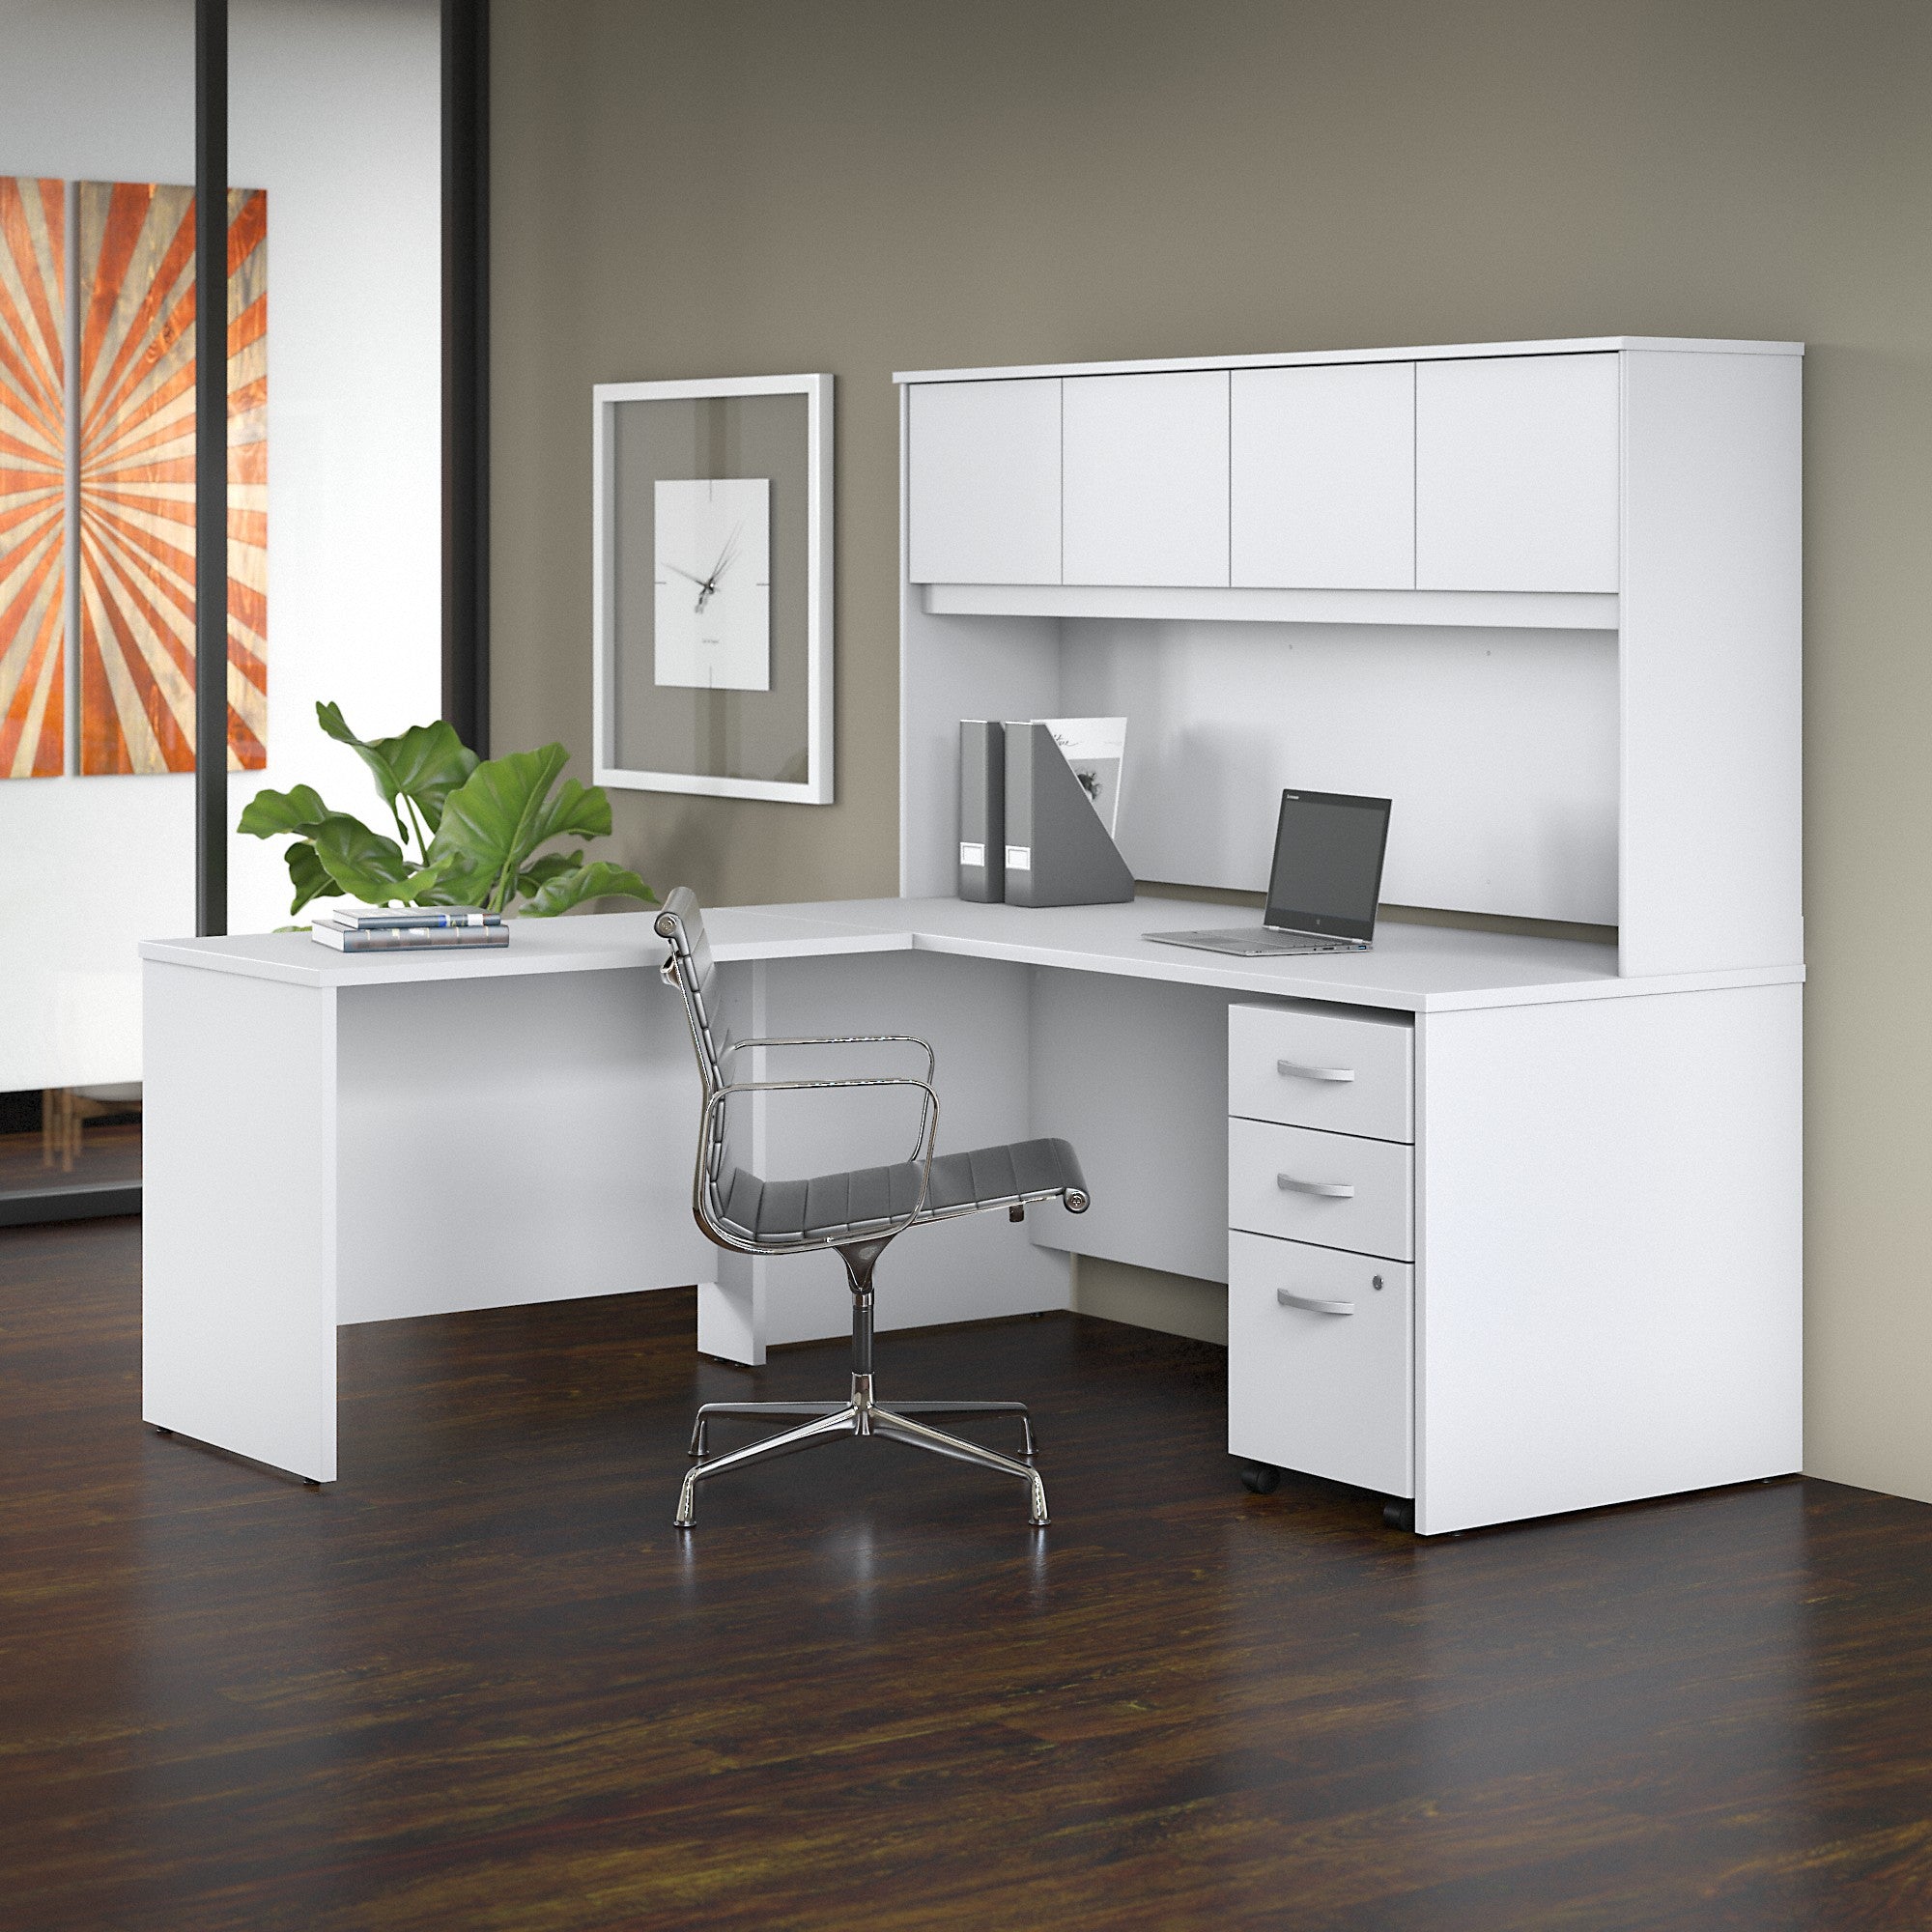 Bush Business Furniture Studio C 72W x 30D L Shaped Desk with Hutch, Mobile File Cabinet and 42W Return